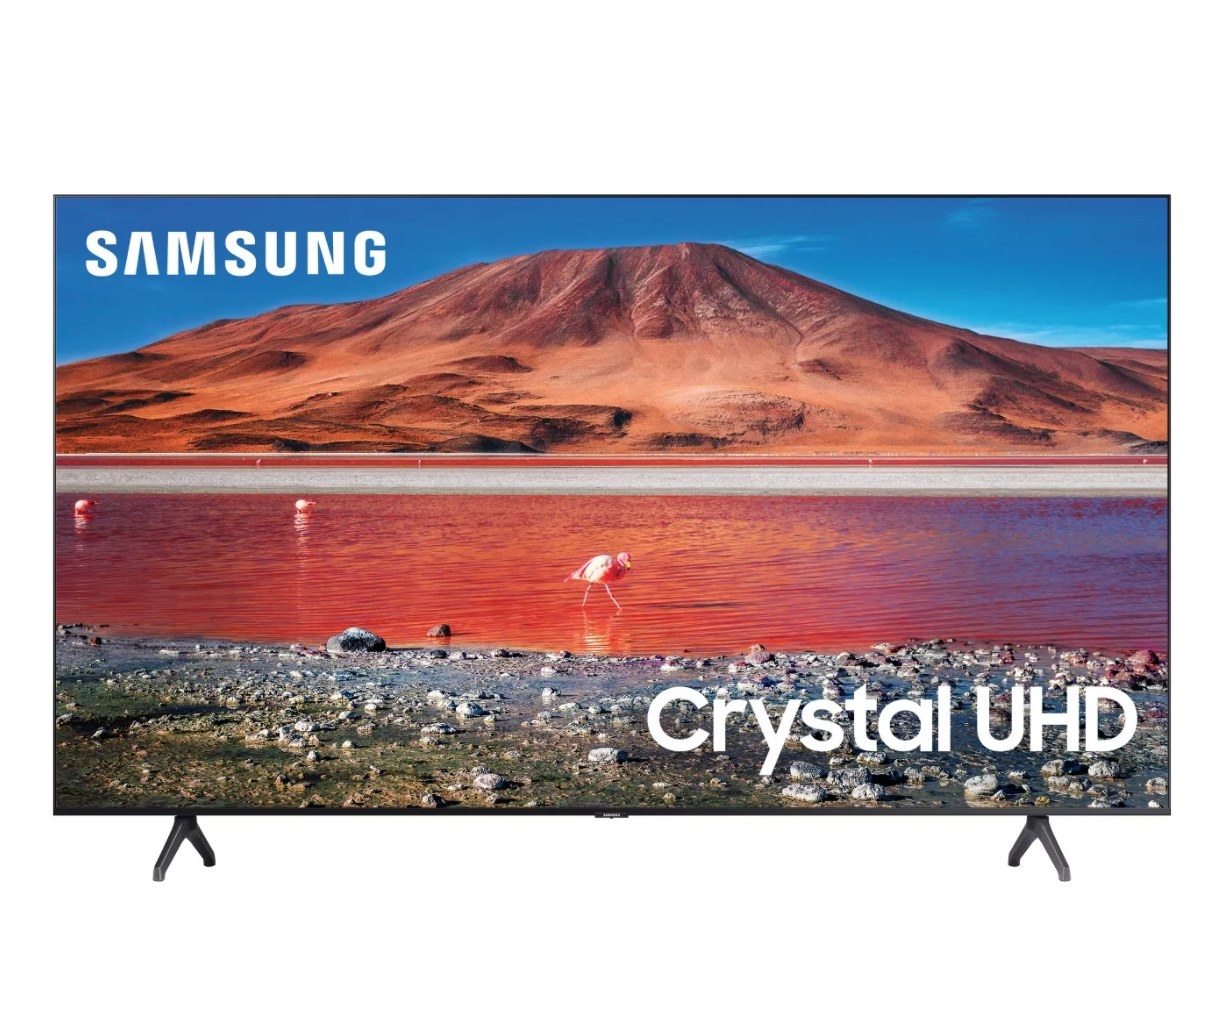 Samsung 50 inch smart television